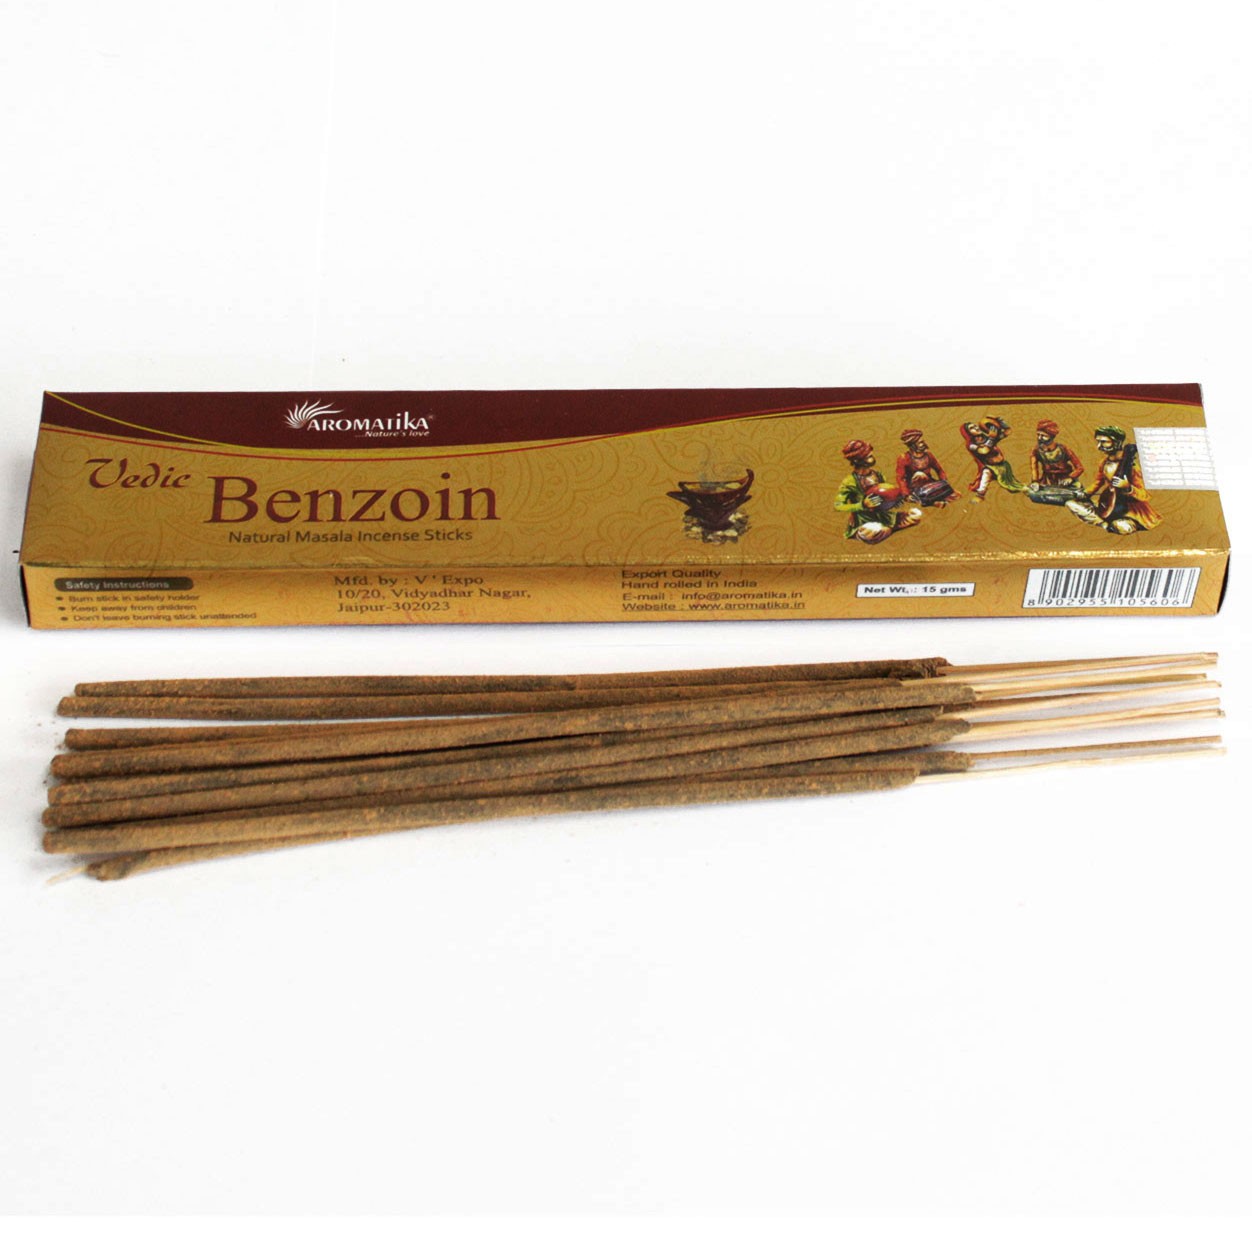 5 x Packs Vedic Incense Sticks - Benzoin